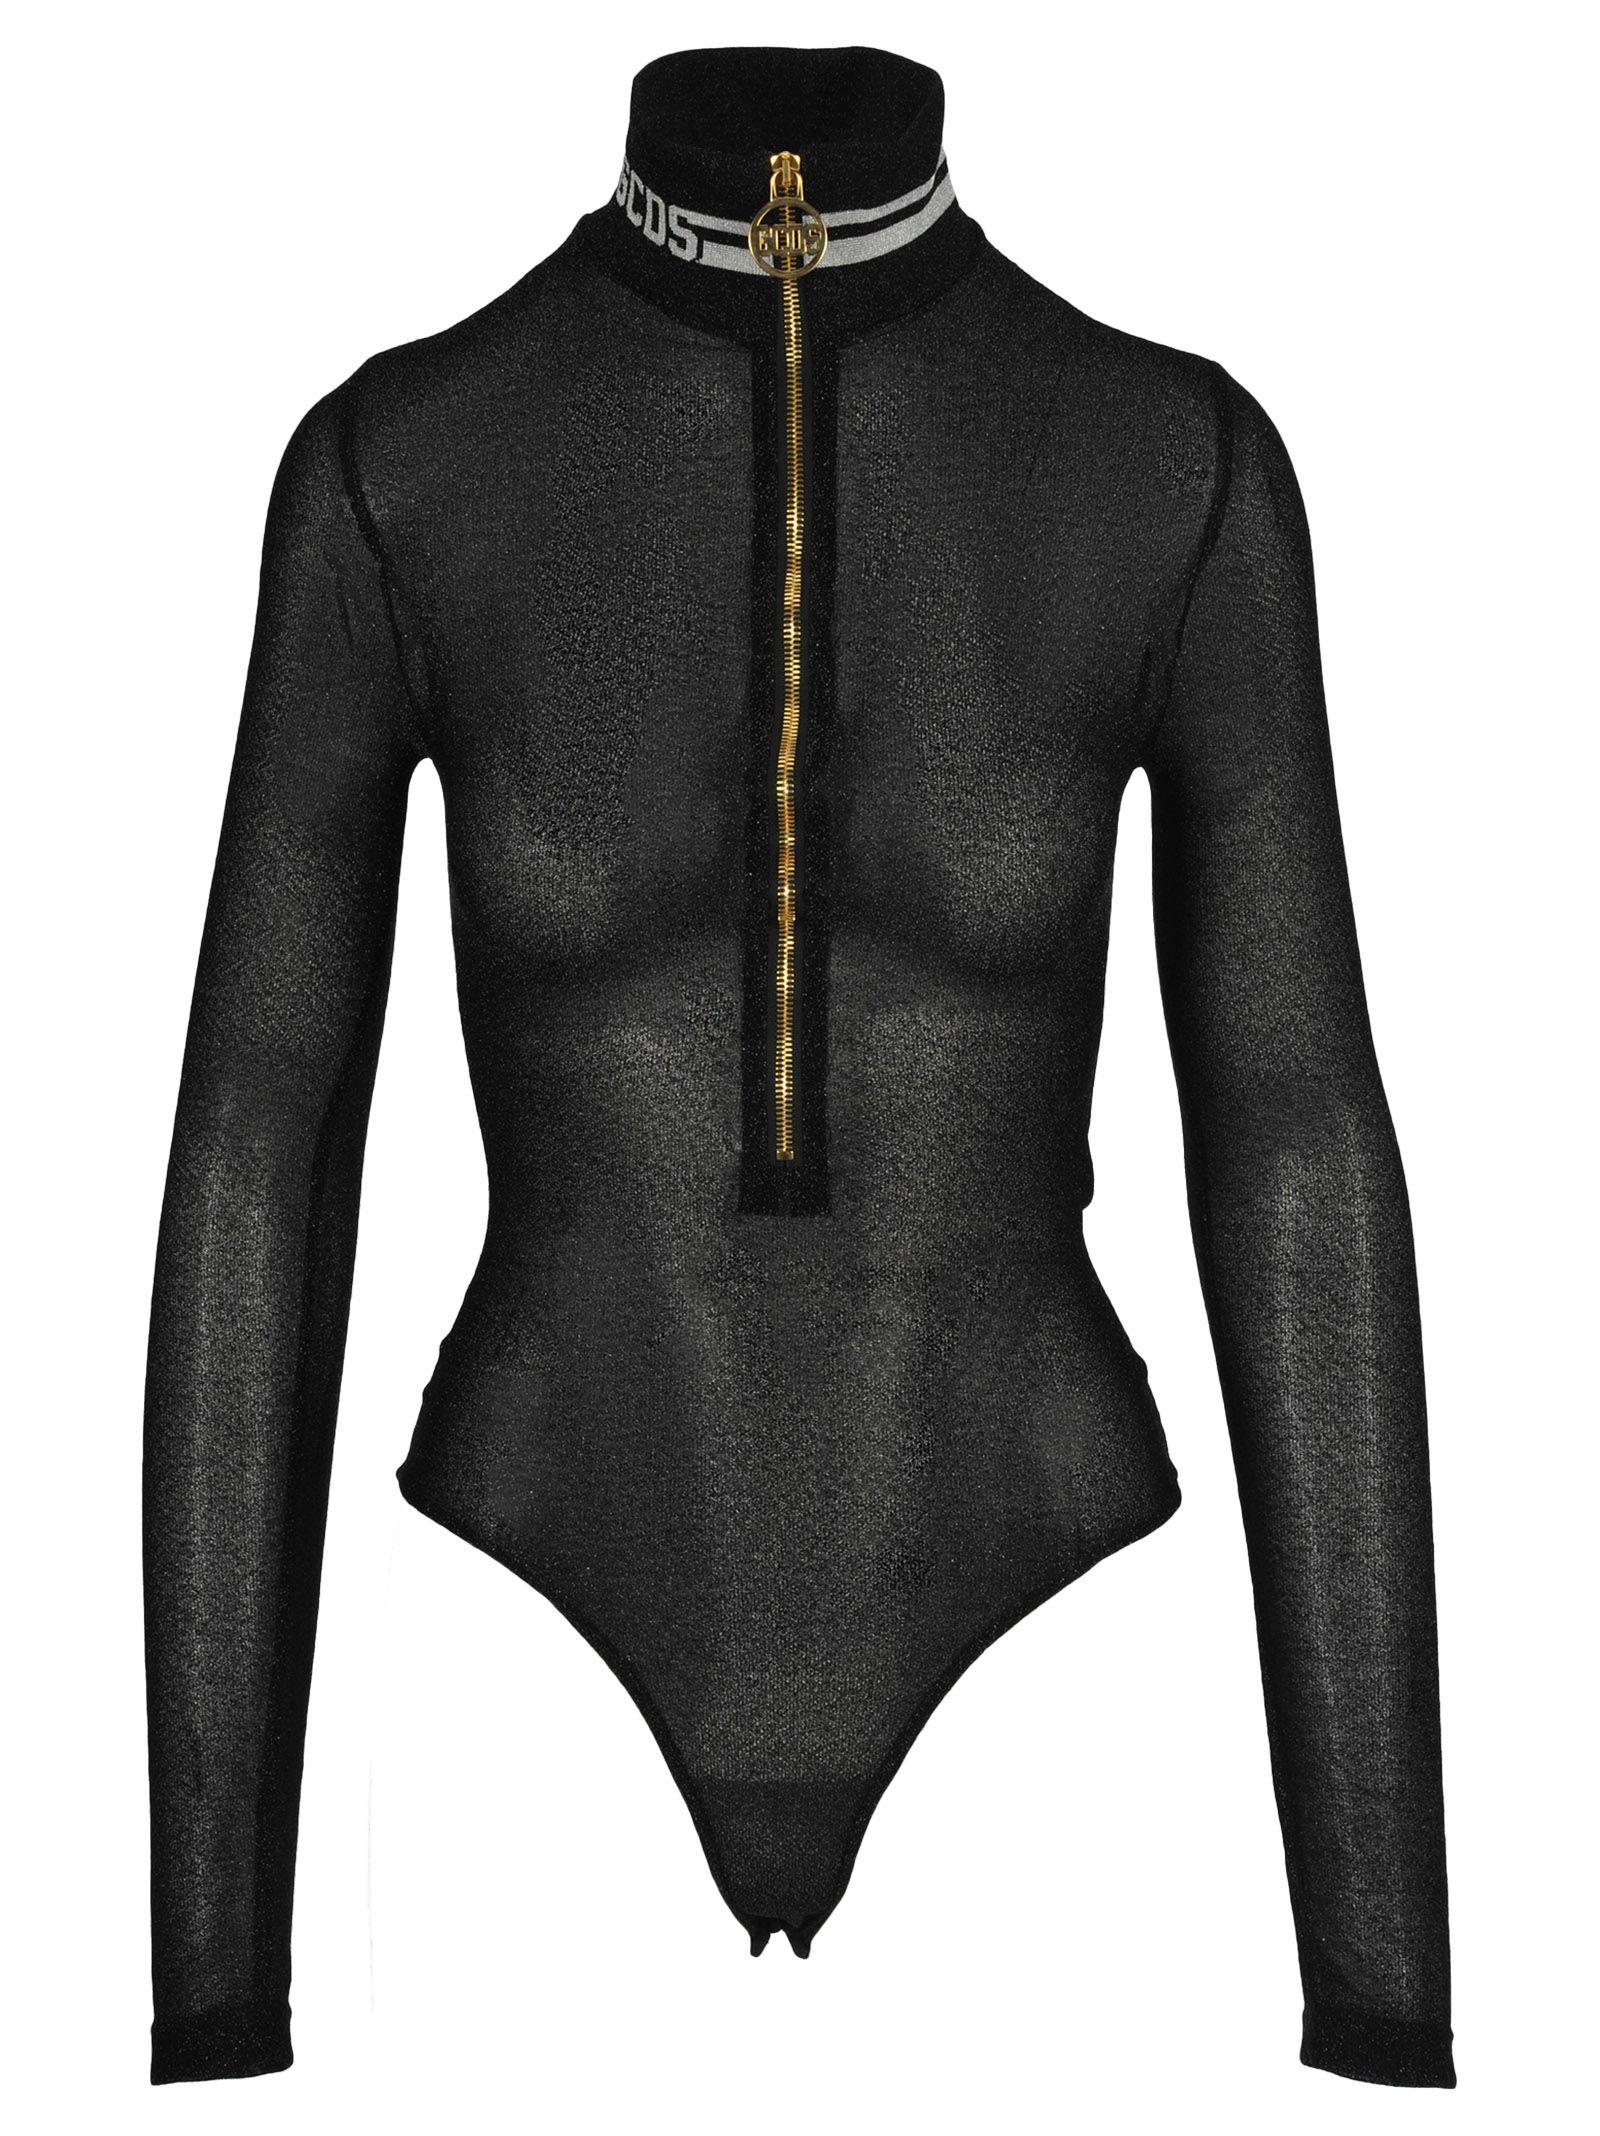 Gcds Body Lurex Zip In Black | ModeSens